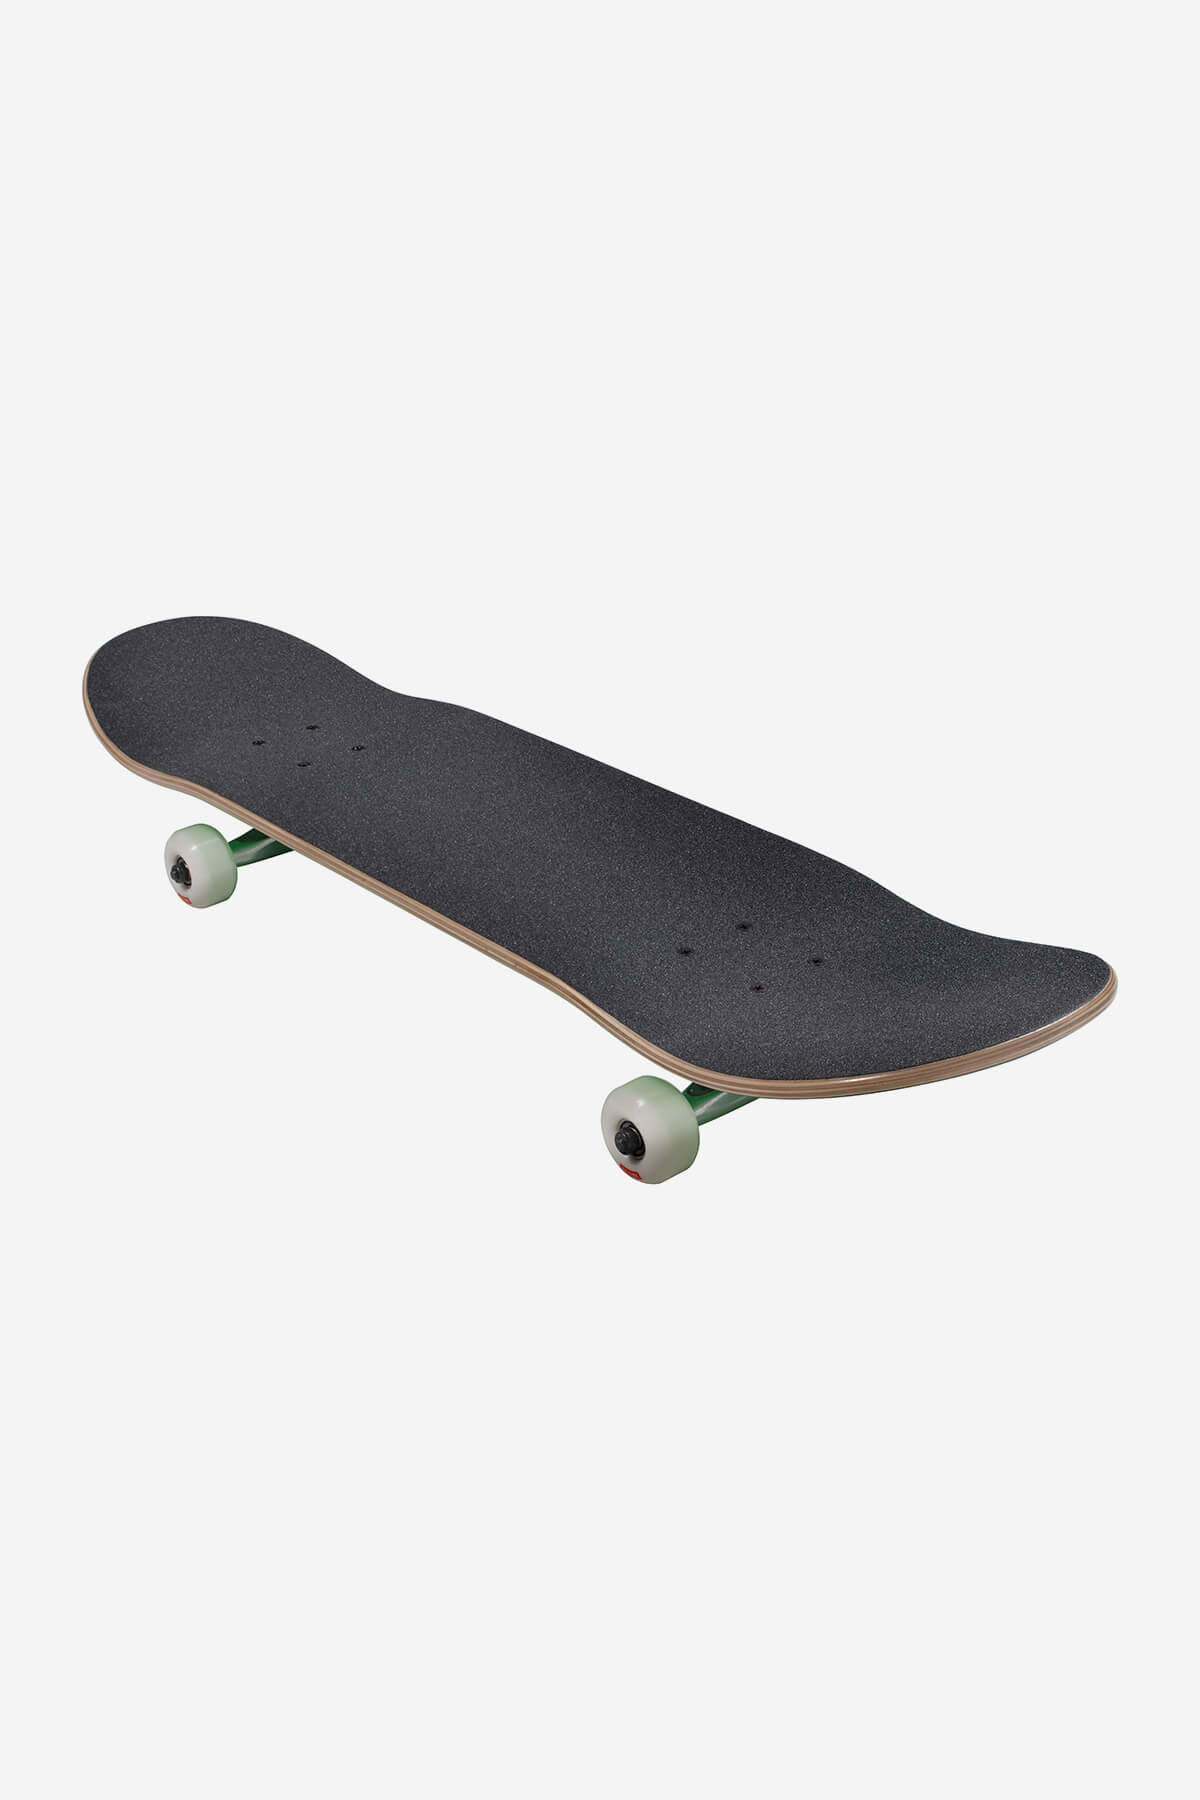 Globe - Goodstock - Neon Green - 8.0" Compleet Skateboard